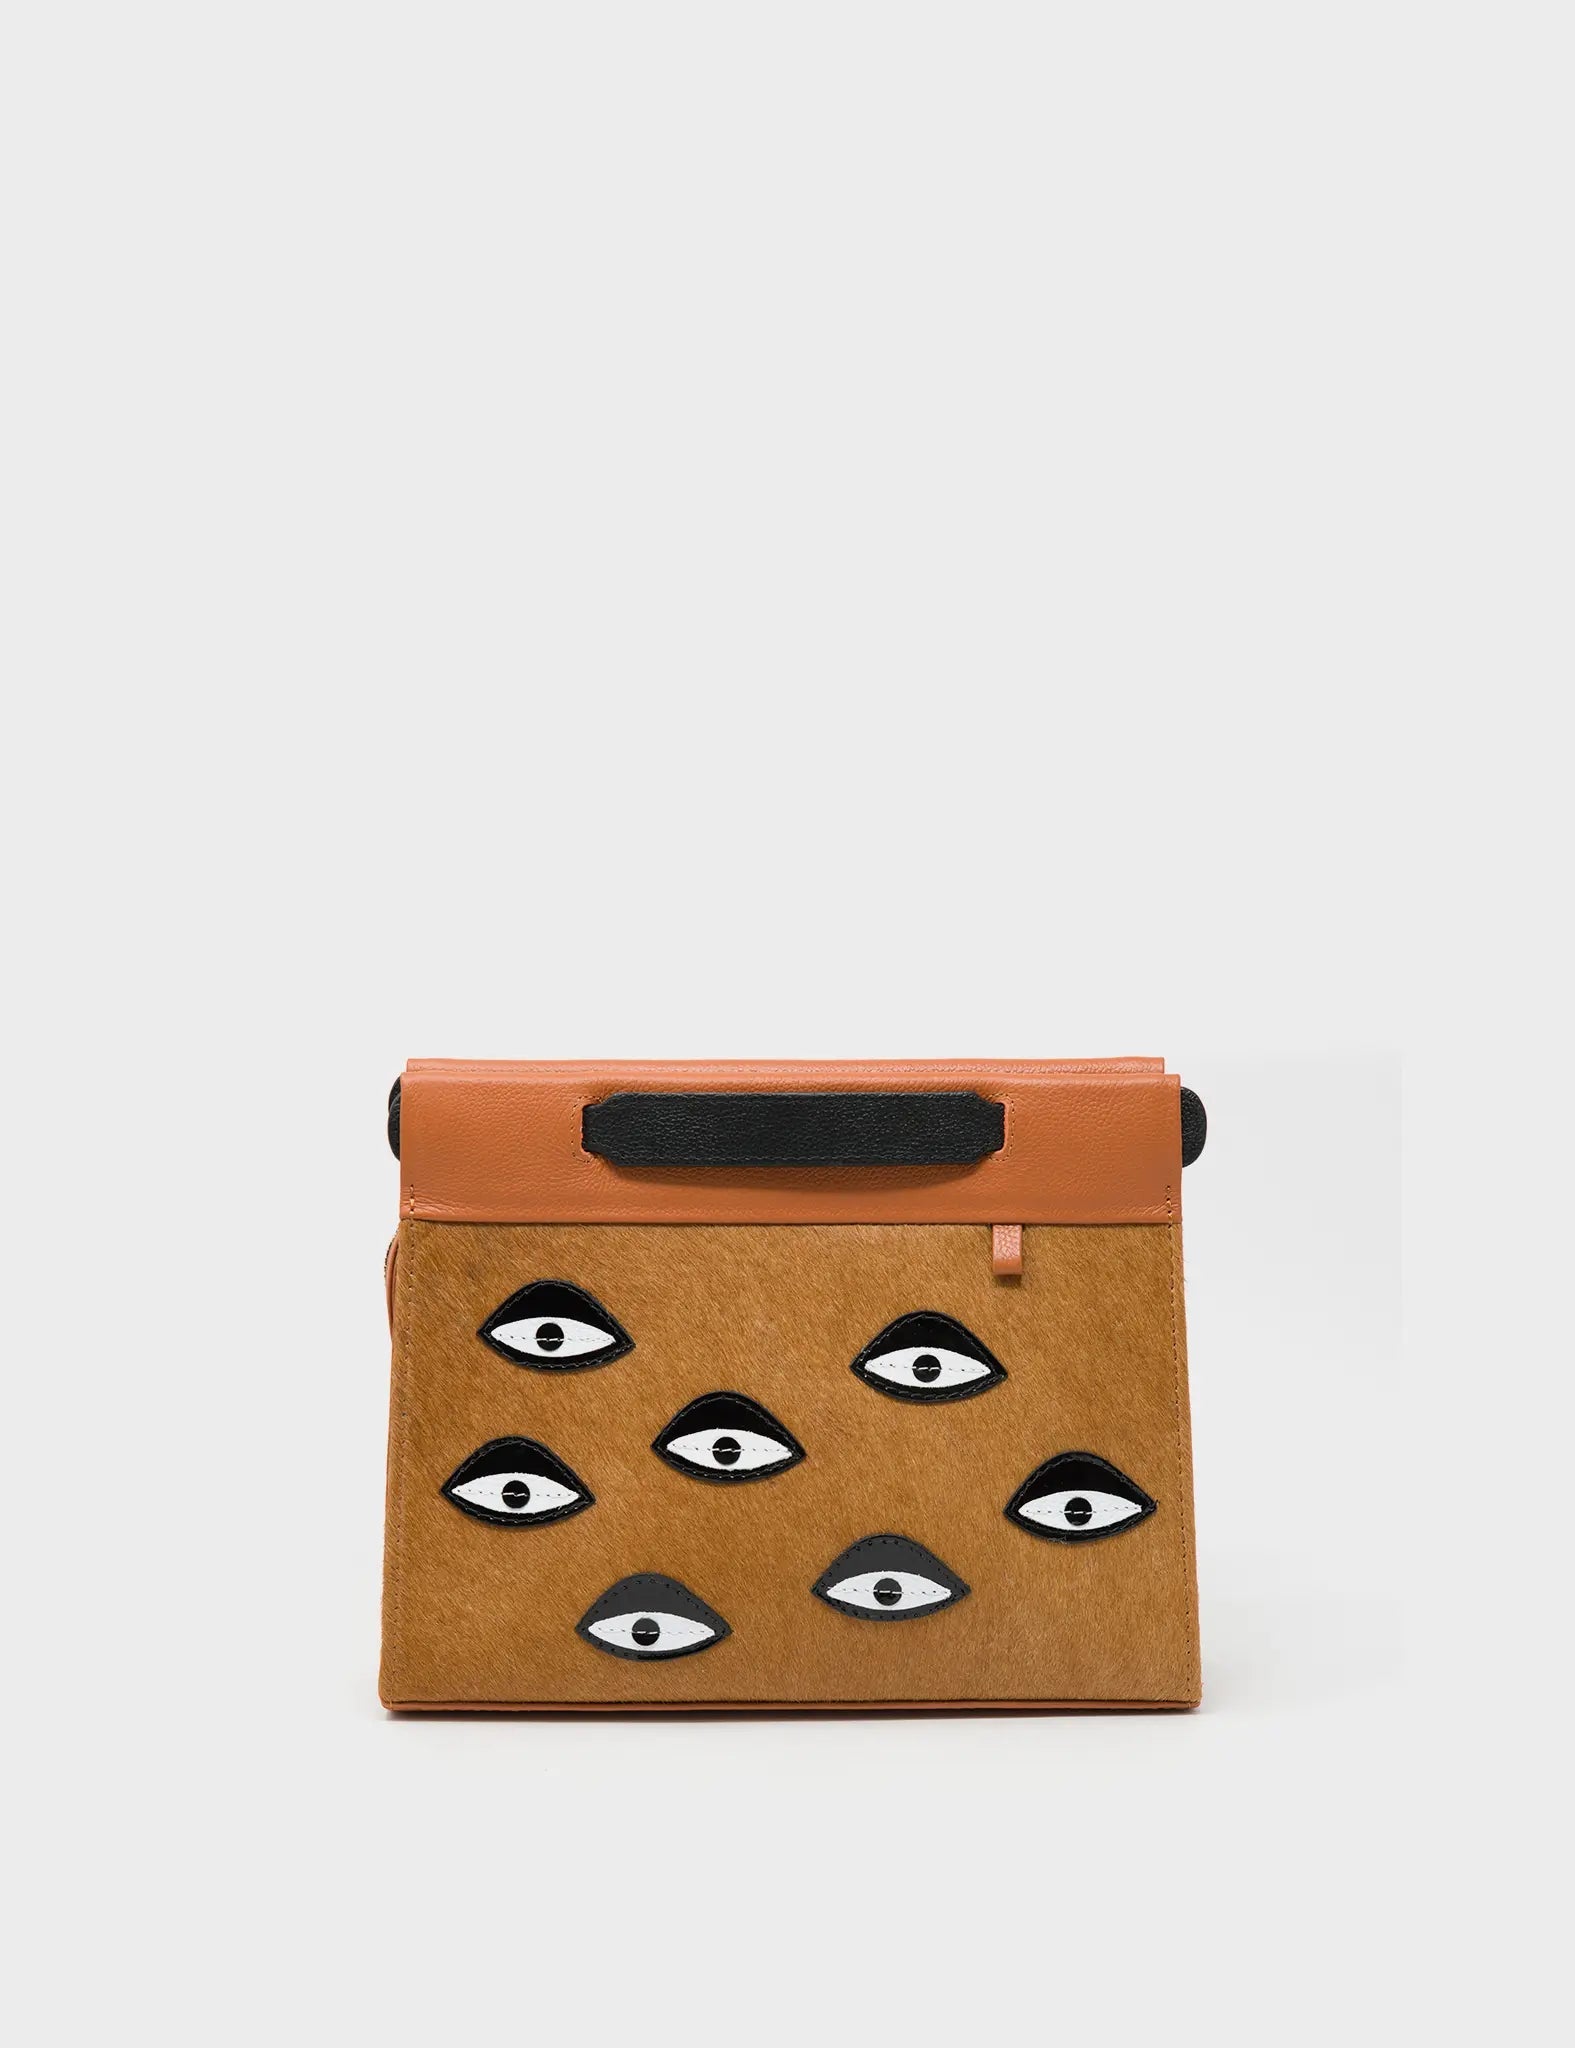 Yoshi Shop Until You Drop Leather Applique Shoulder Bag / Handbag